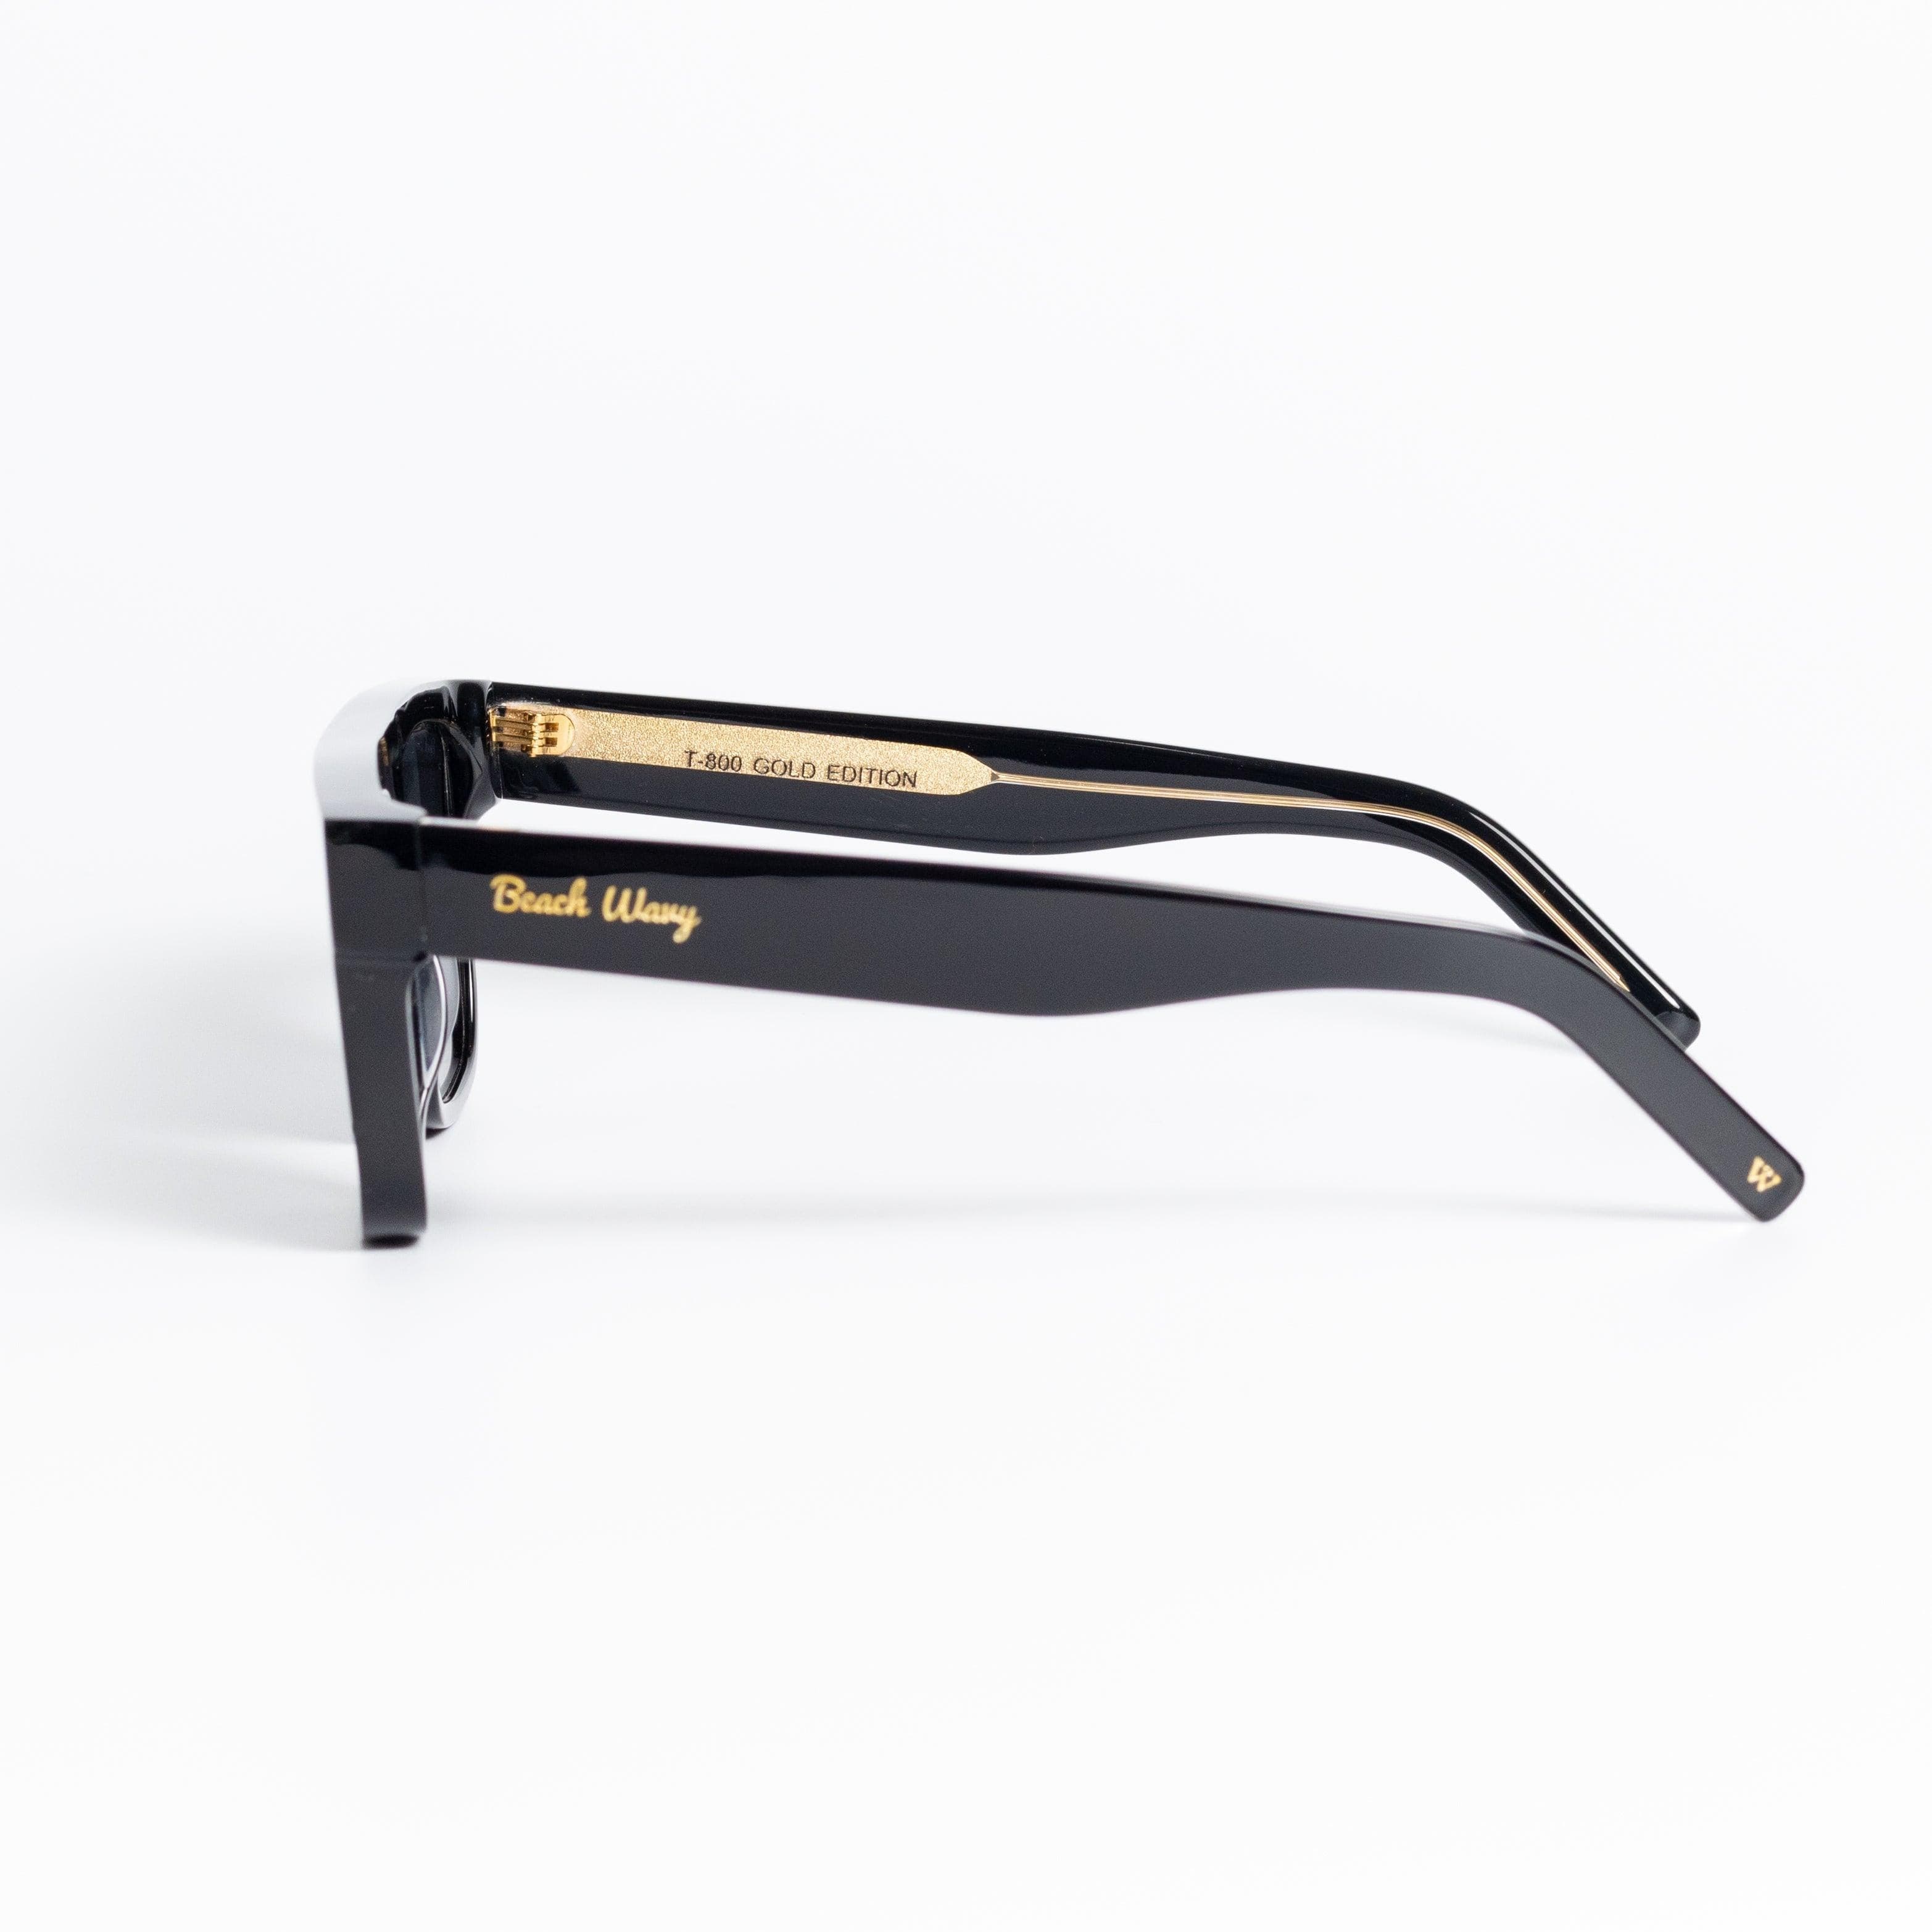 BEACH WAVY Sunglasses Oversized / Black / Polarized Cat.3 BEACH WAVY - T-800 - GOLD EDITION